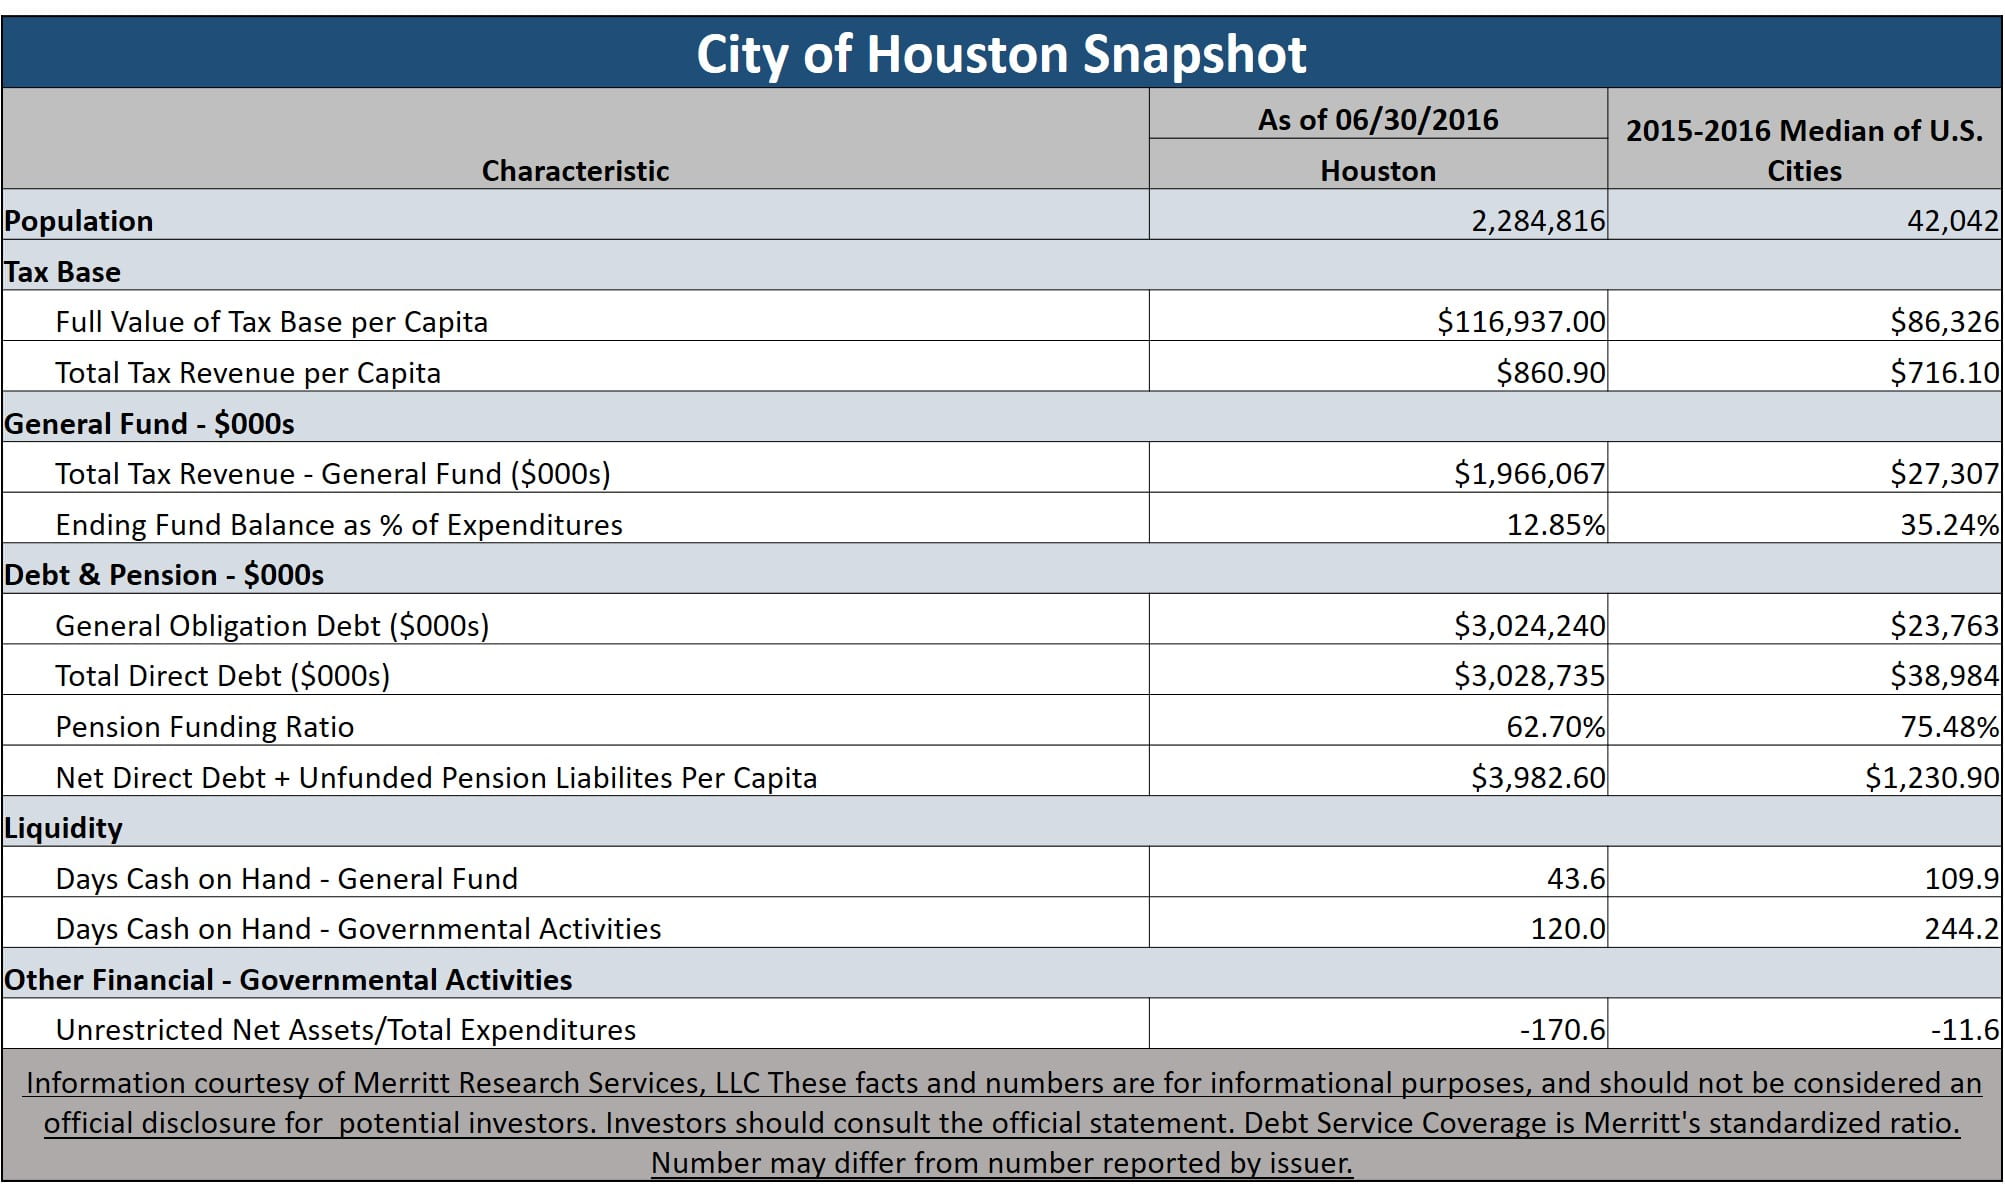 Municipal Bond Featured Snapshot - City of Houston